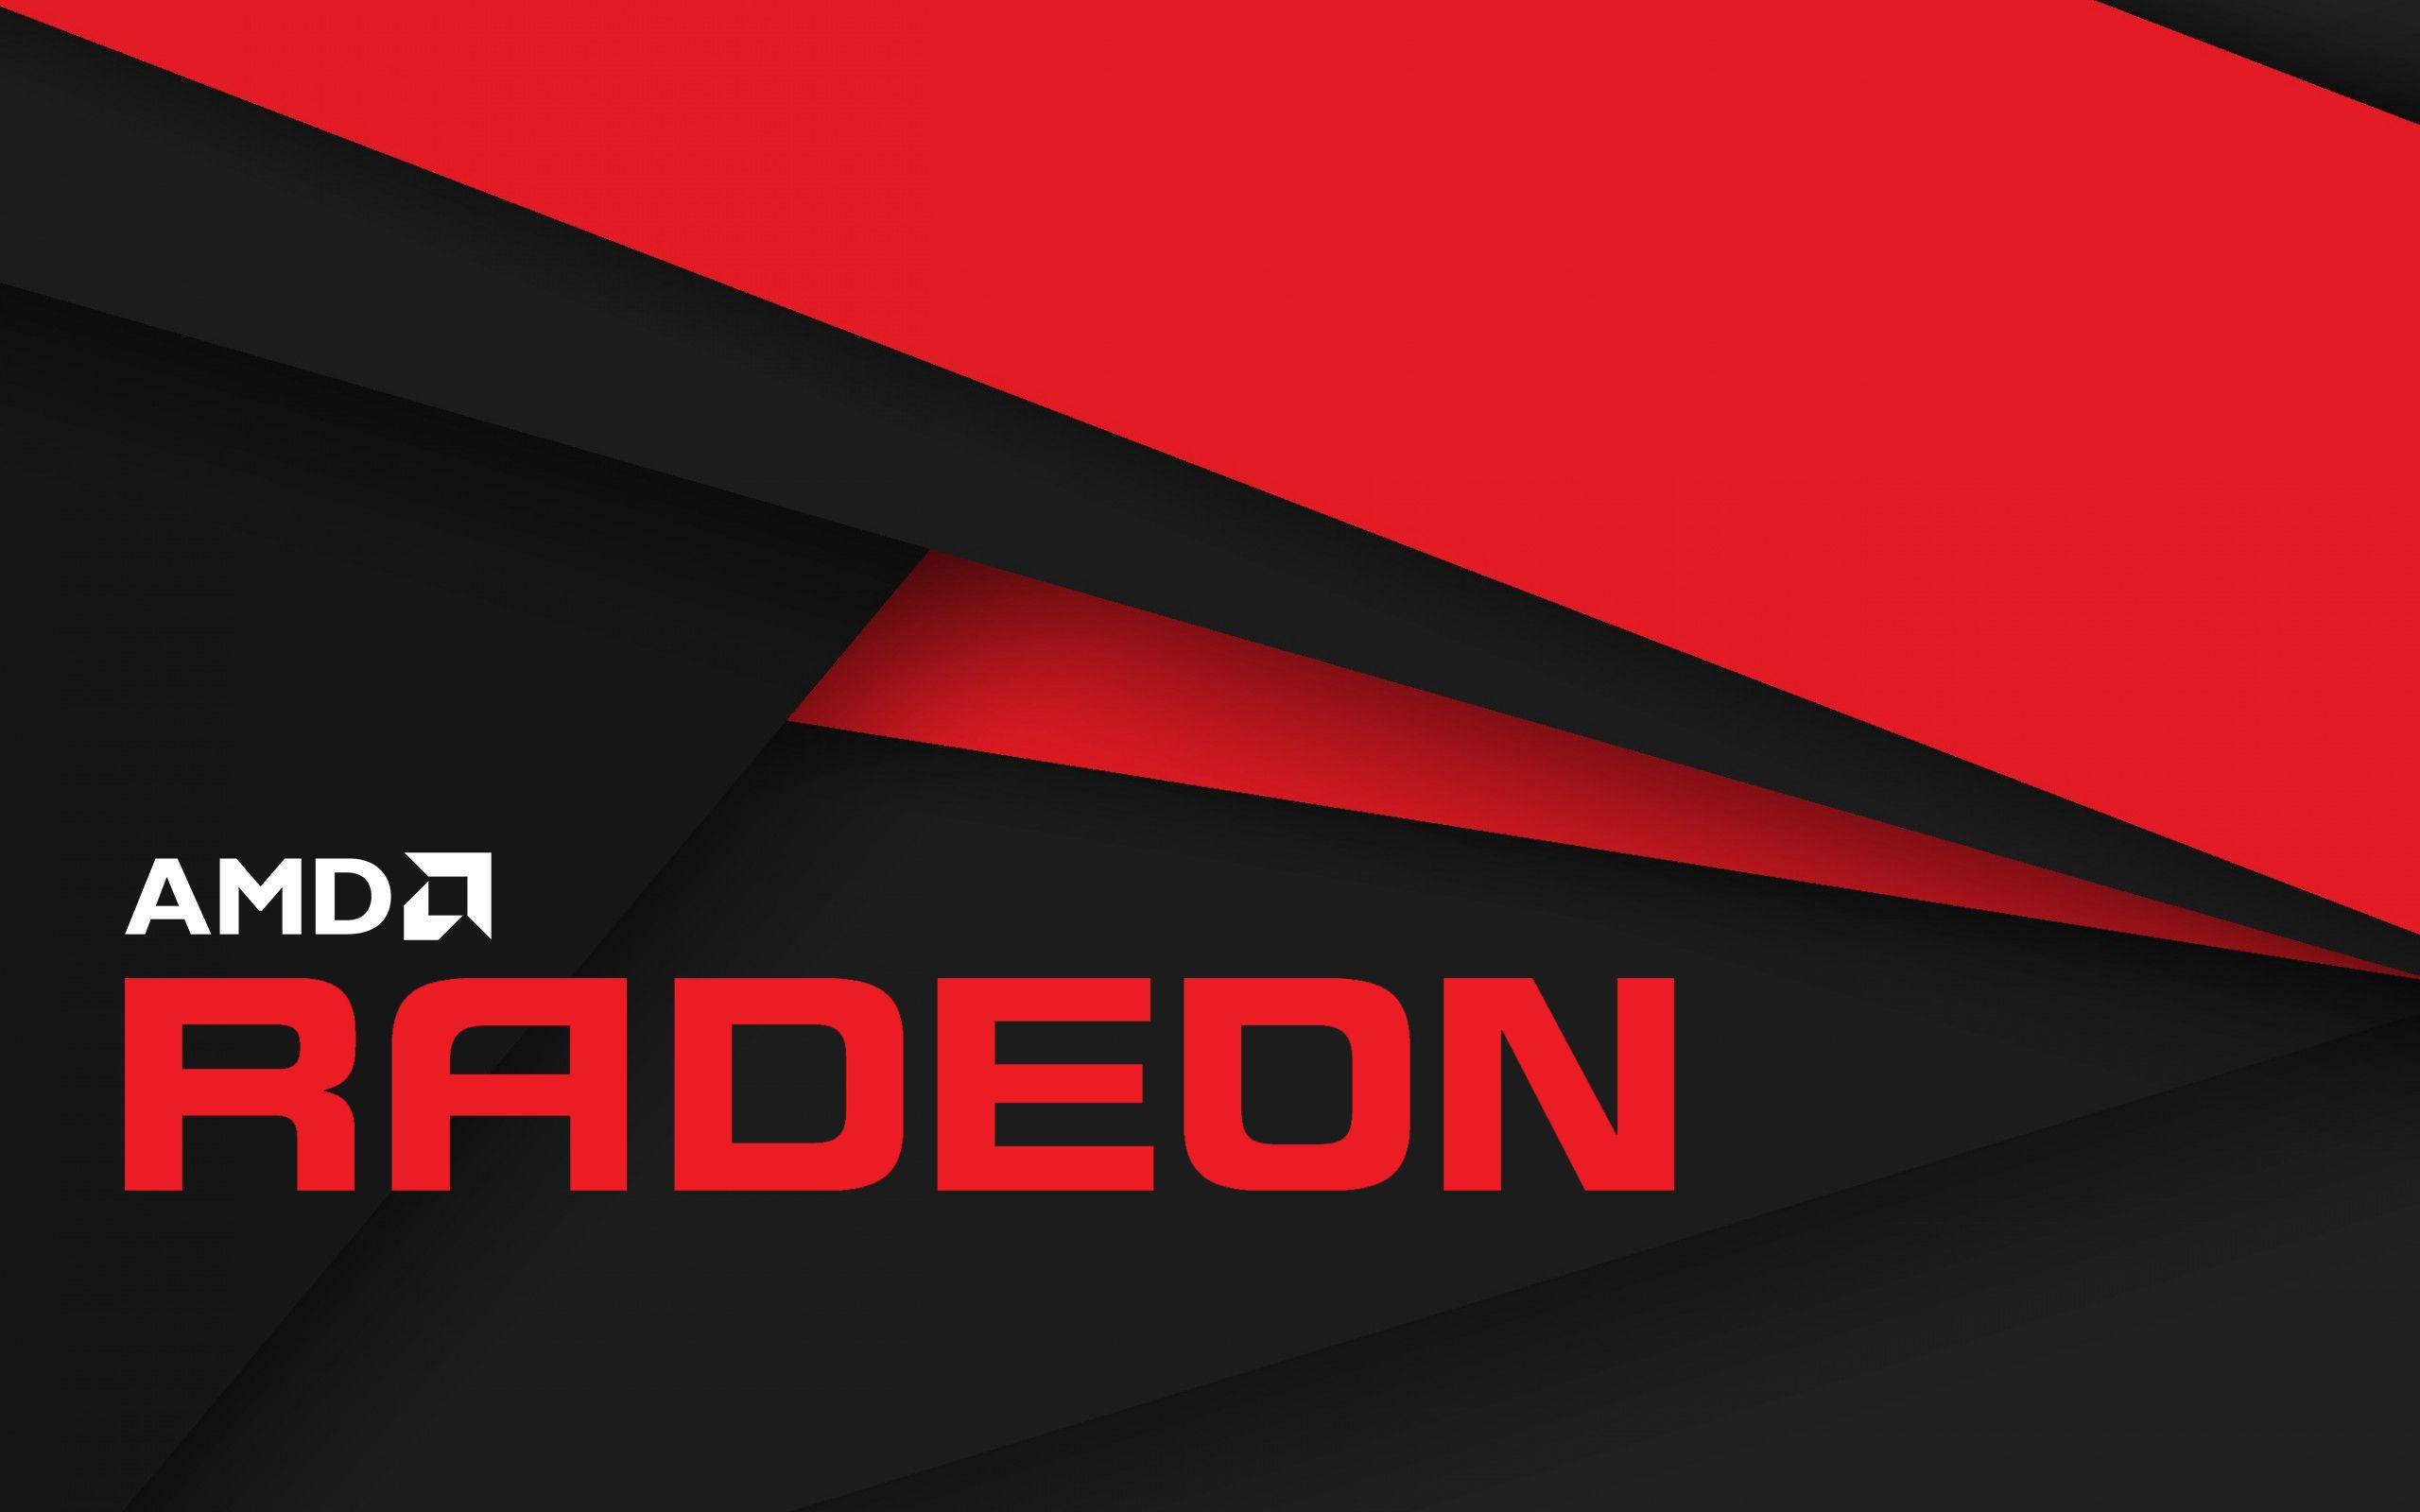 AMD Radeon Wallpaper mania! UPDATED!